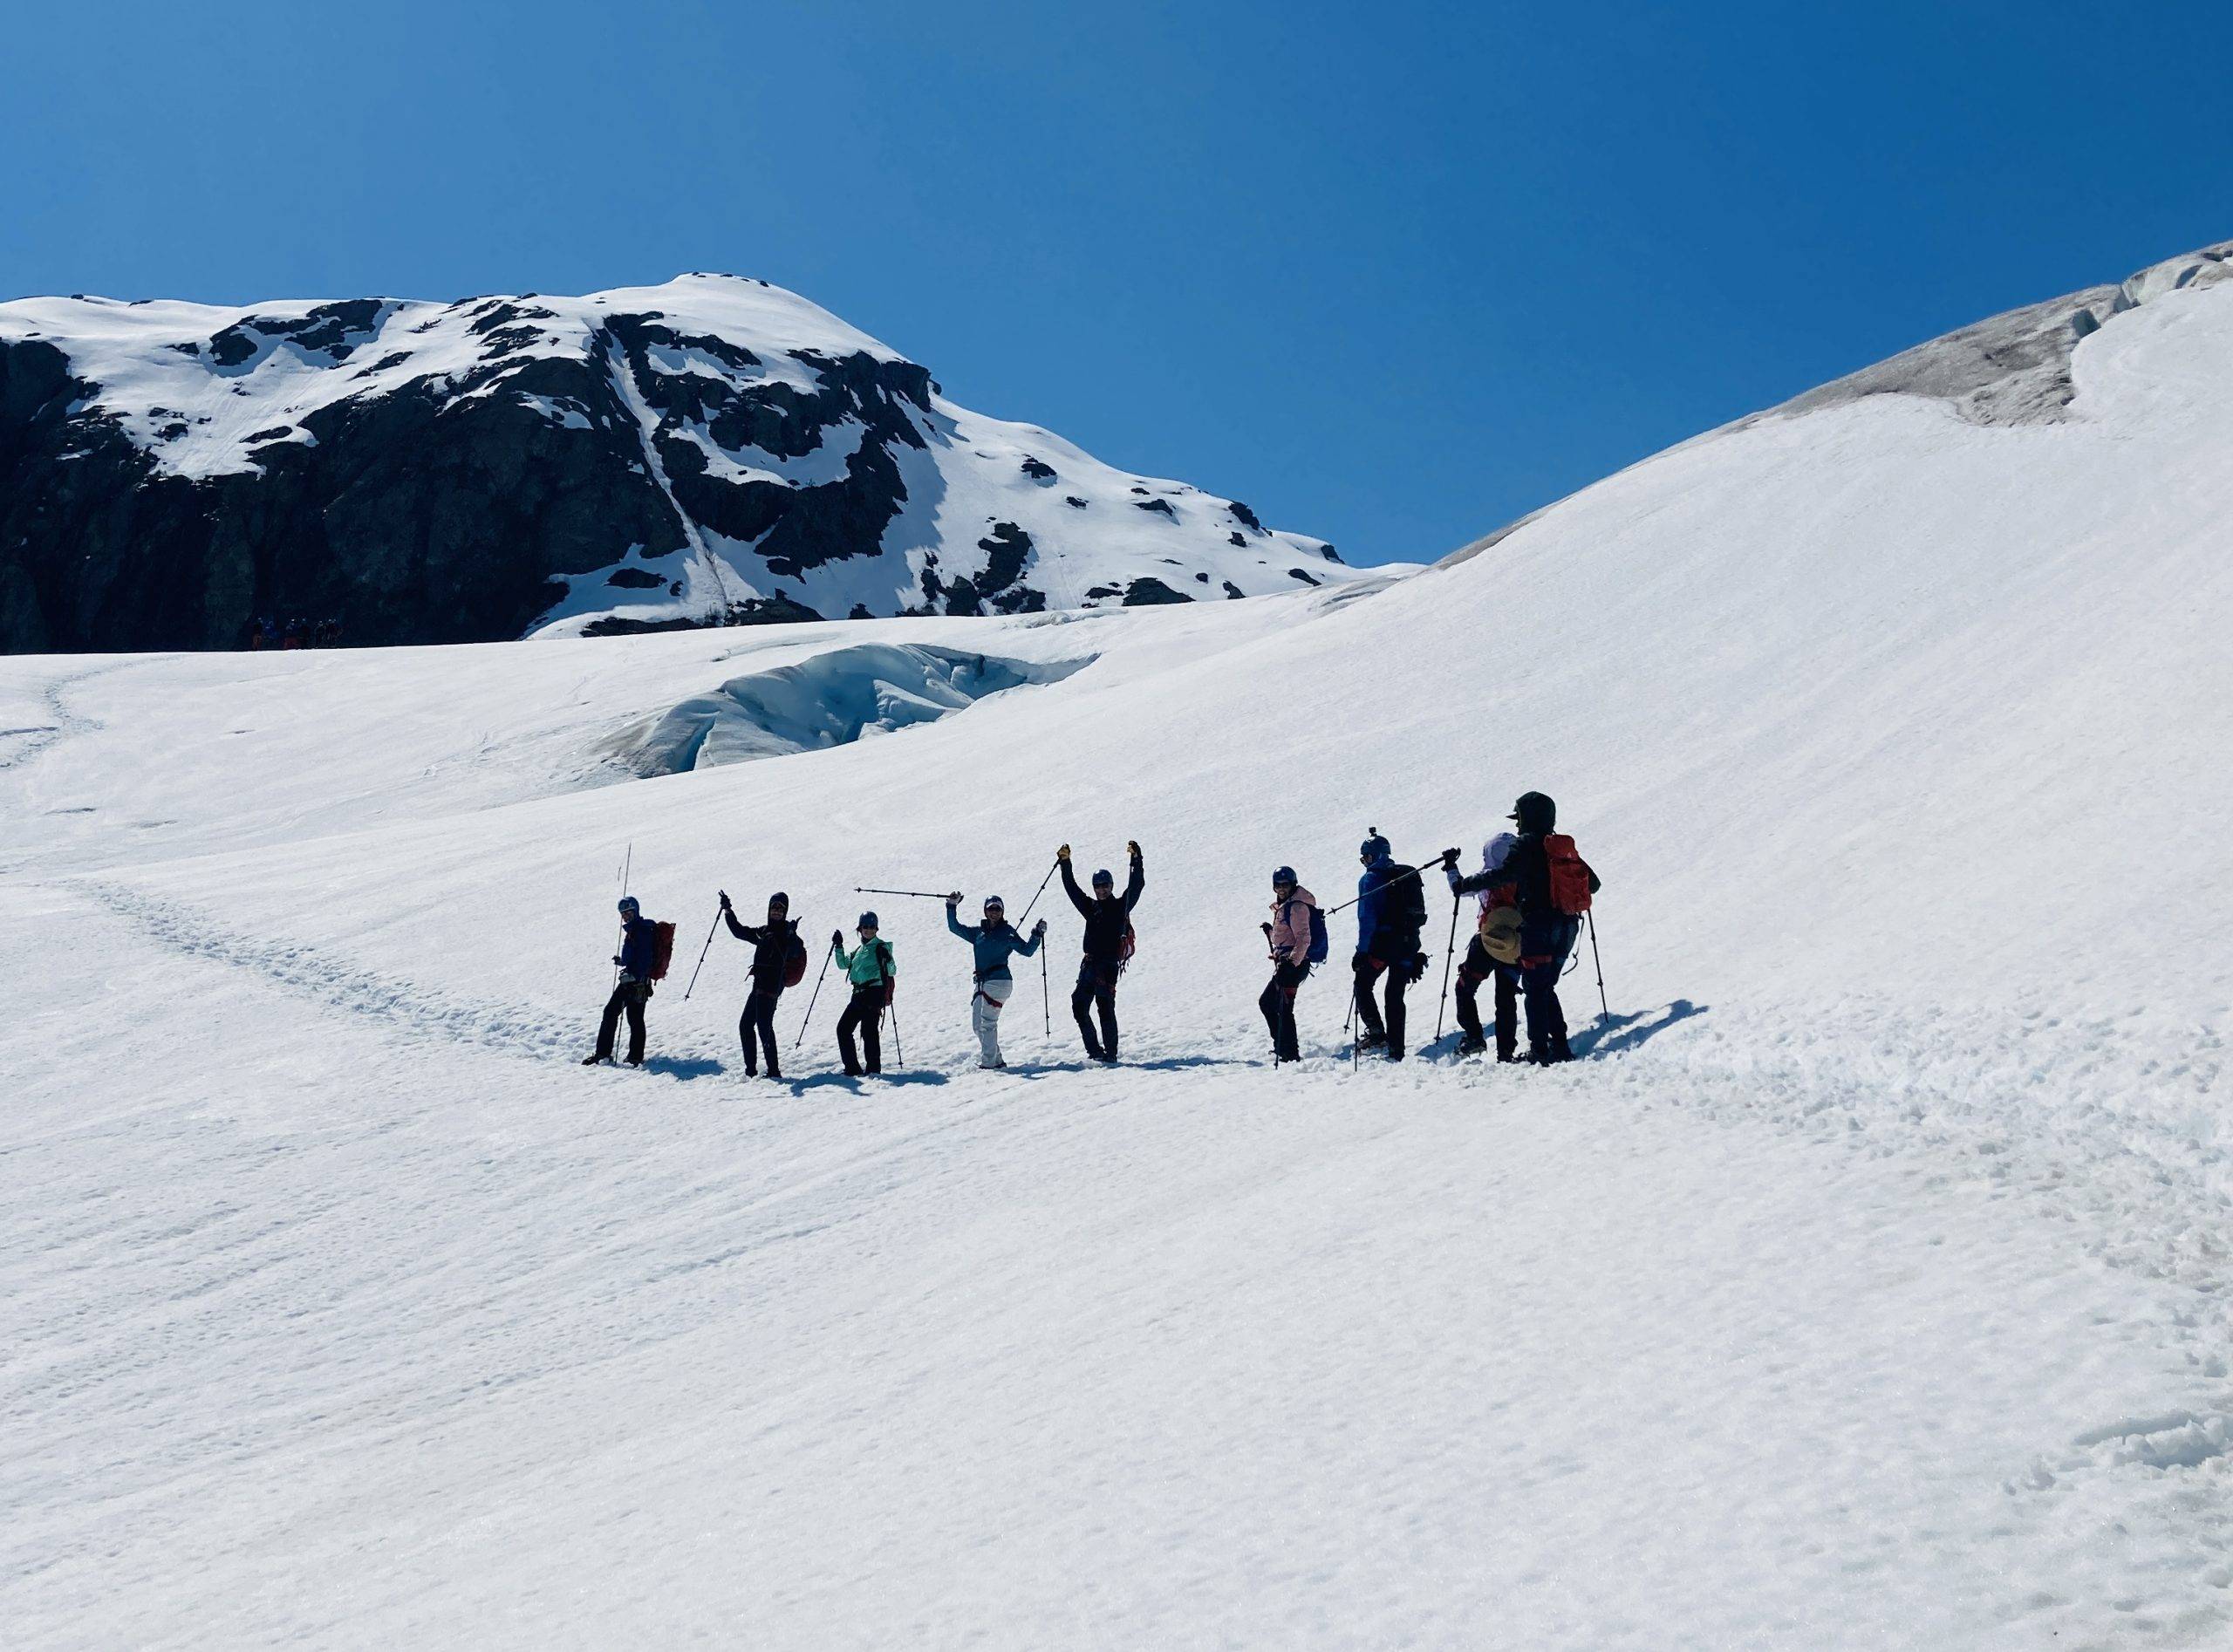 TRIP REPORT: 5/29/22 Exit Glacier Ice Hiking Adventure